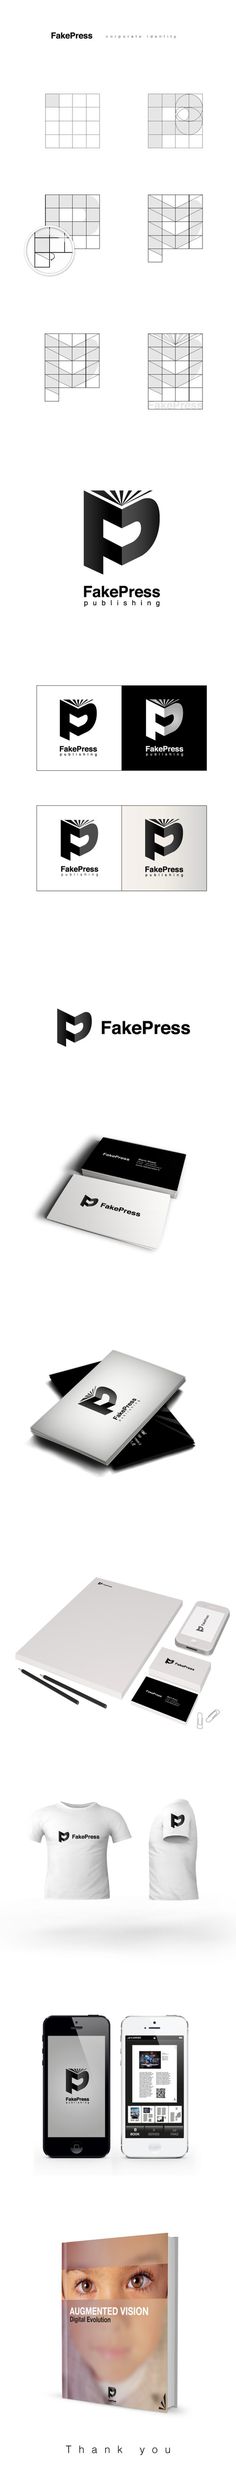 FakePress | identity #design #drogu #brand #identity #fakepress